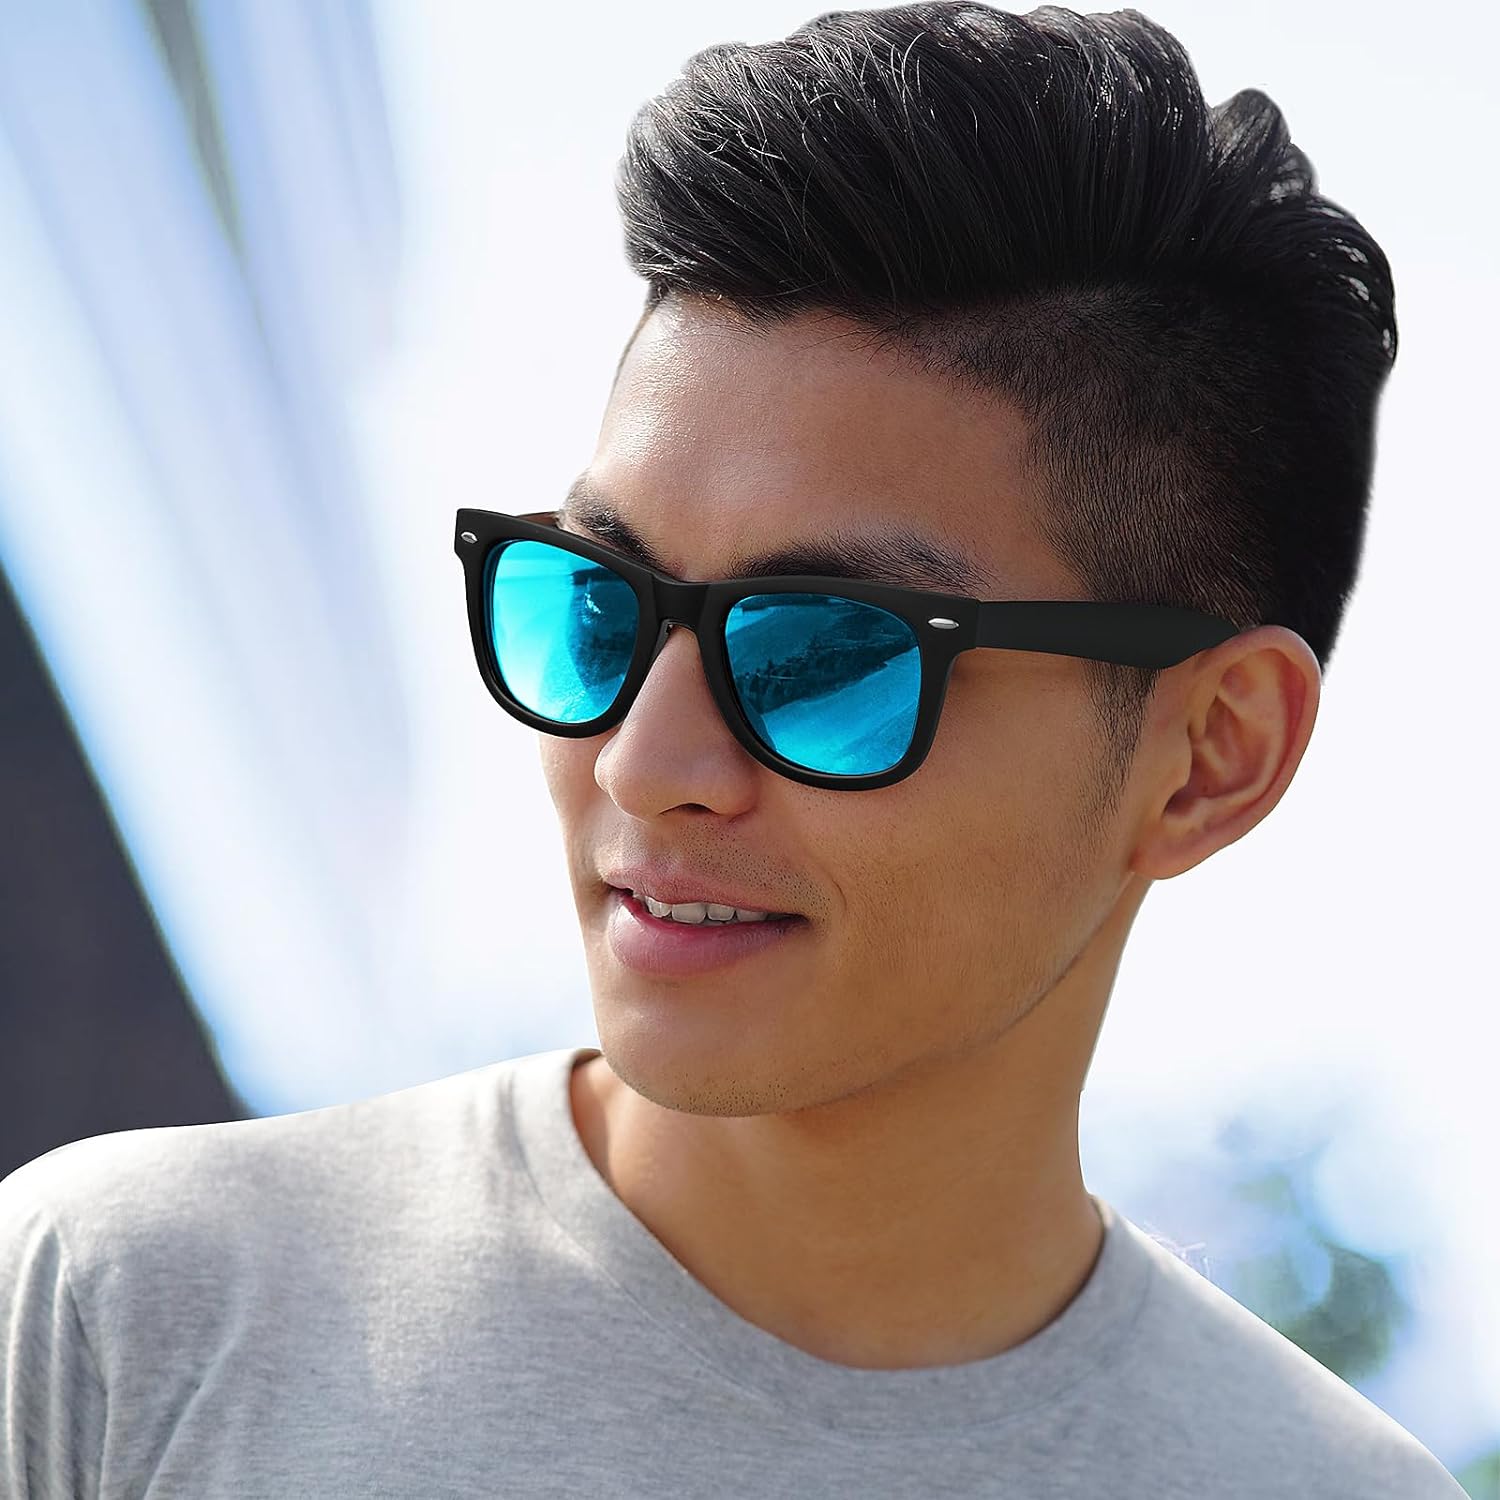 OJIRRU Polarized Sunglasses for Men Sports Sun Glasses UV400 Protection Mens Sunglasses Rectangular Shades Outdoor Driving Fishing Sunglasses